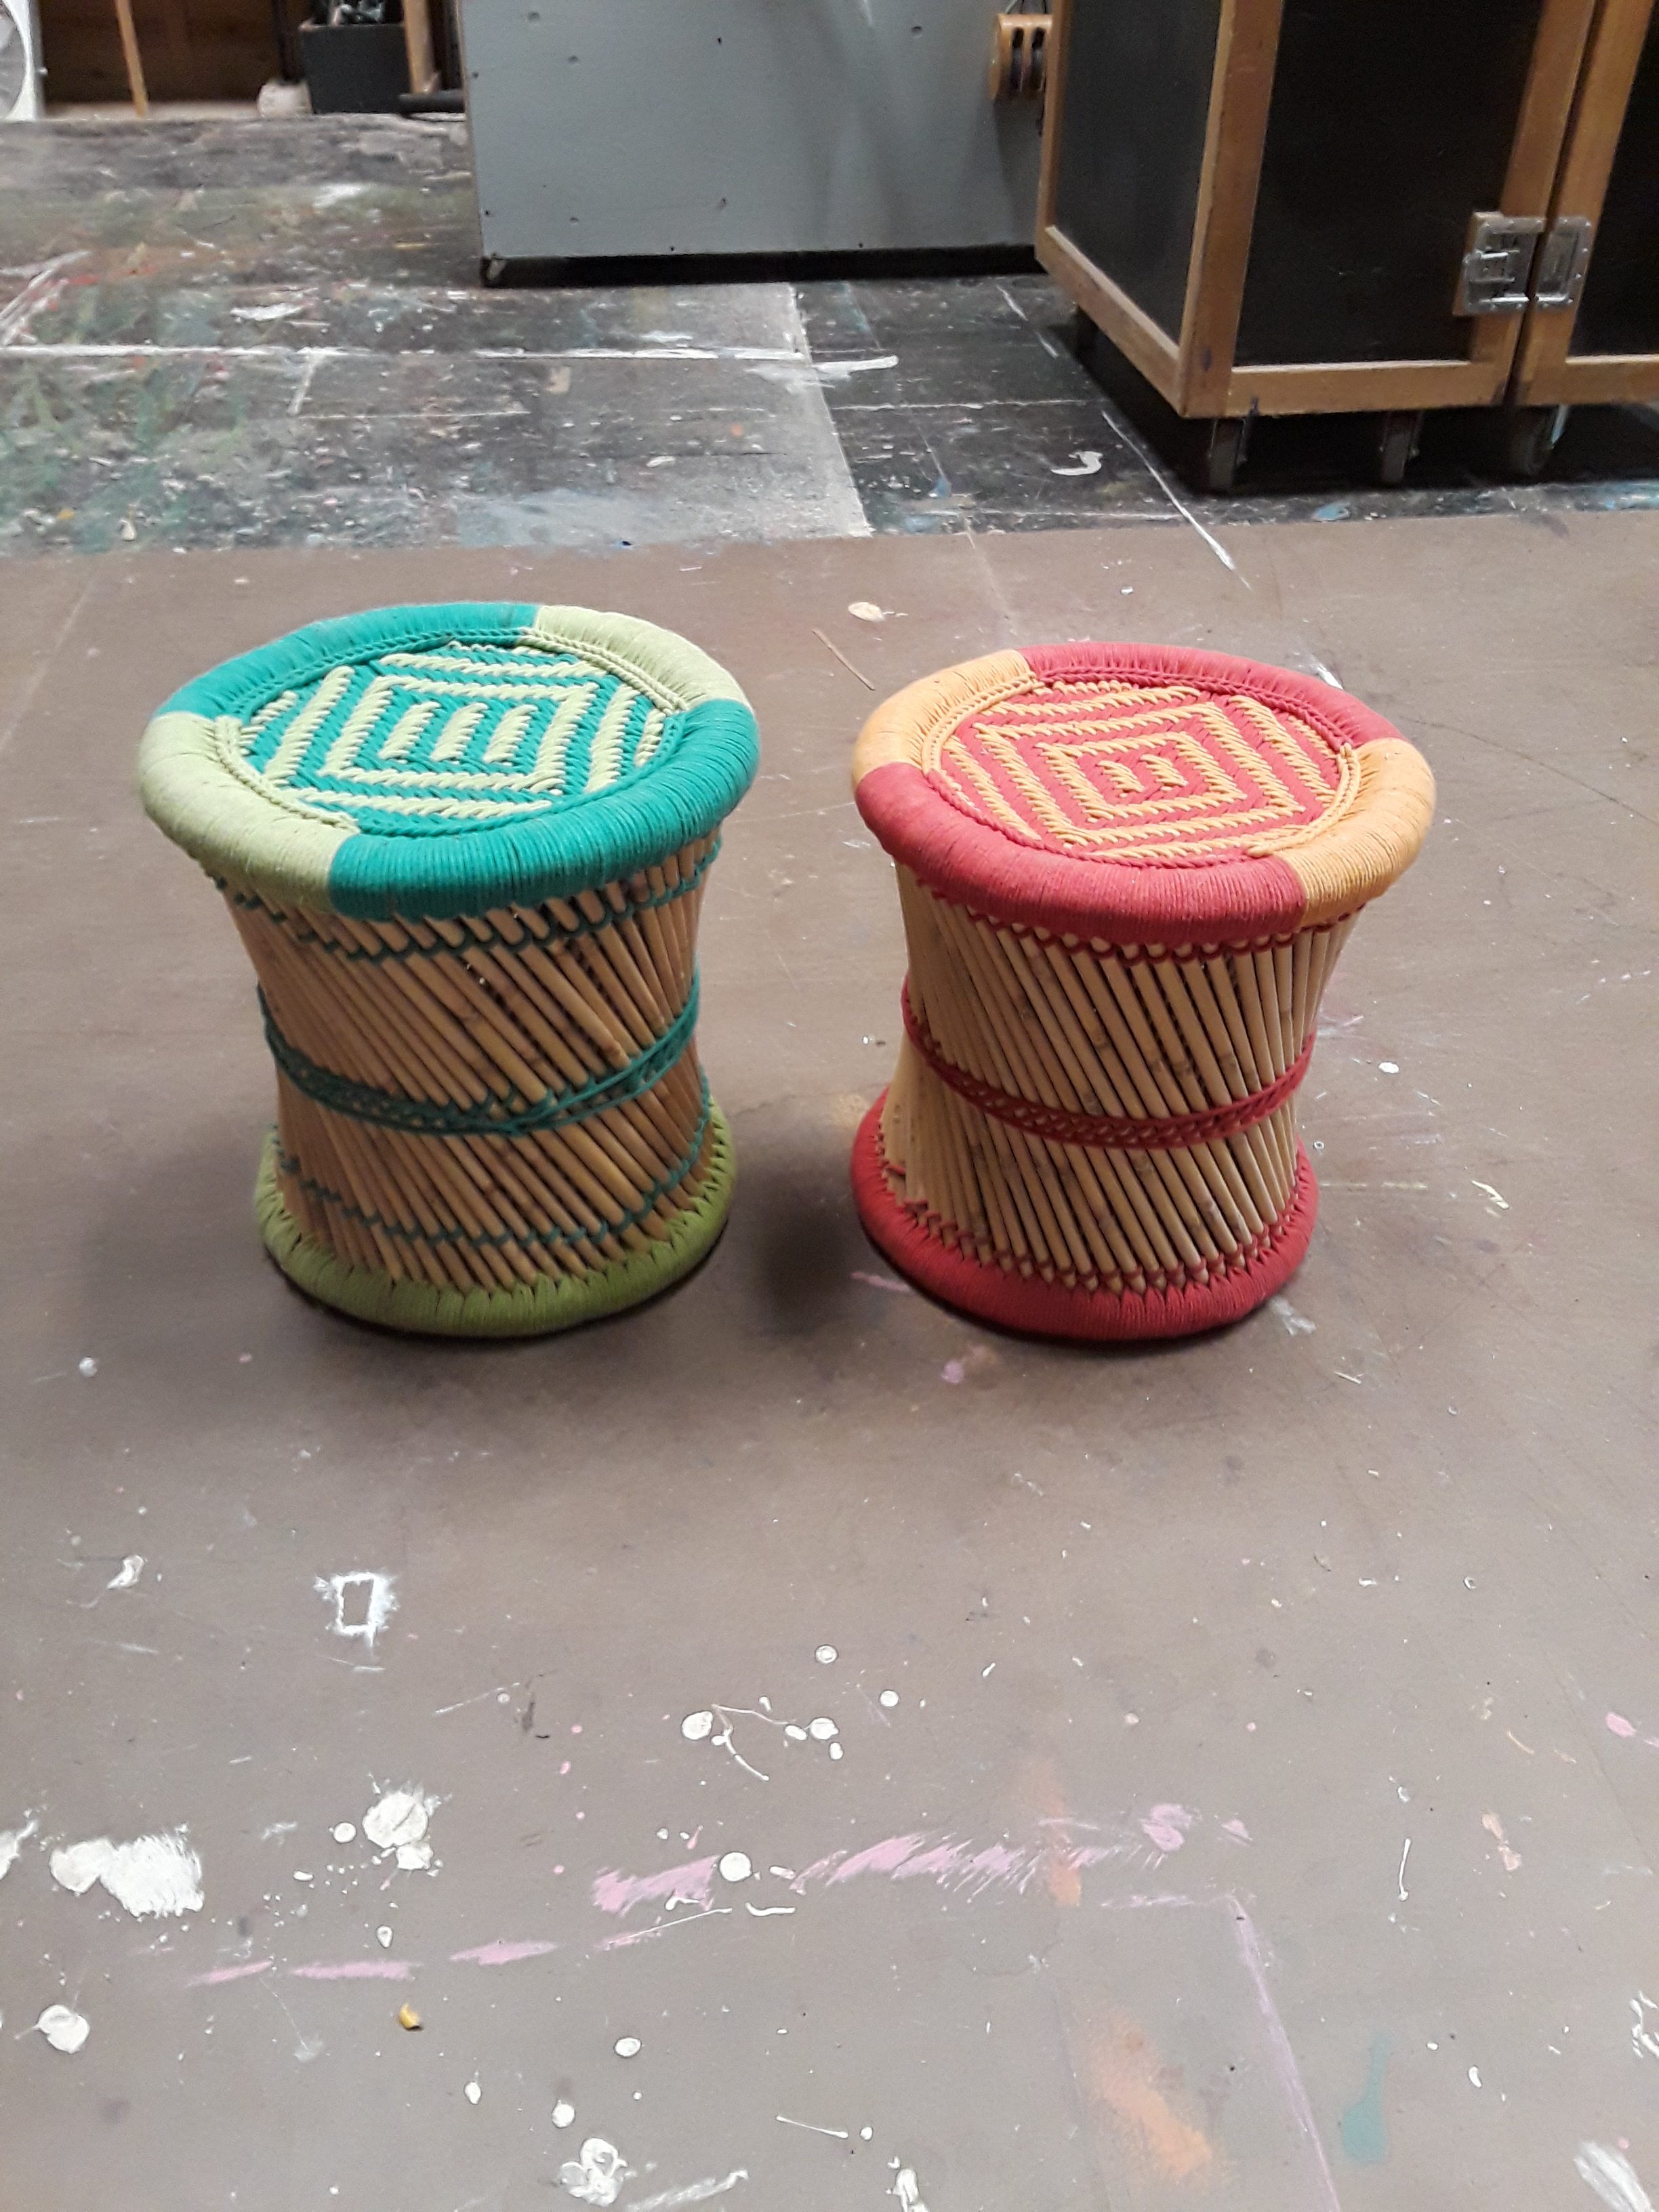 stools (2, bamboo teal & pink)